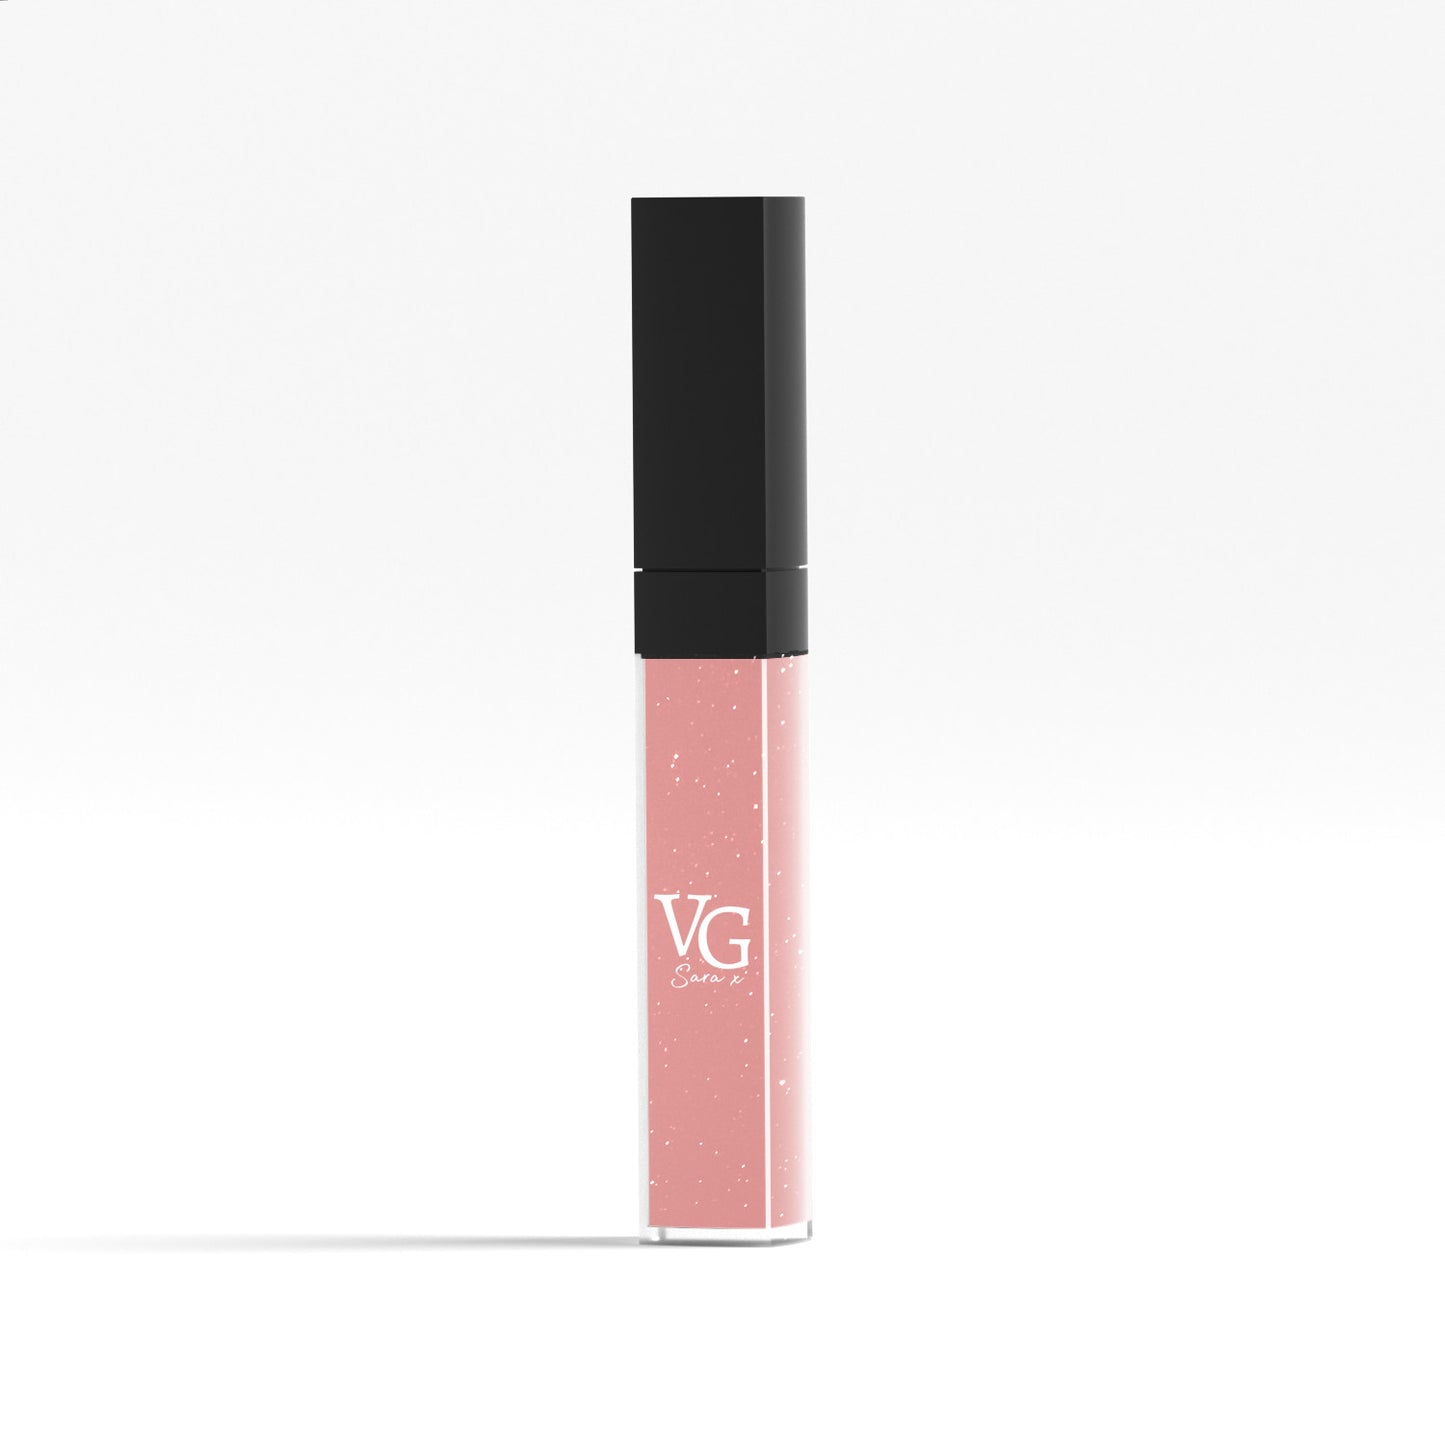 Durable pink vegan liquid lipstick with VG branding